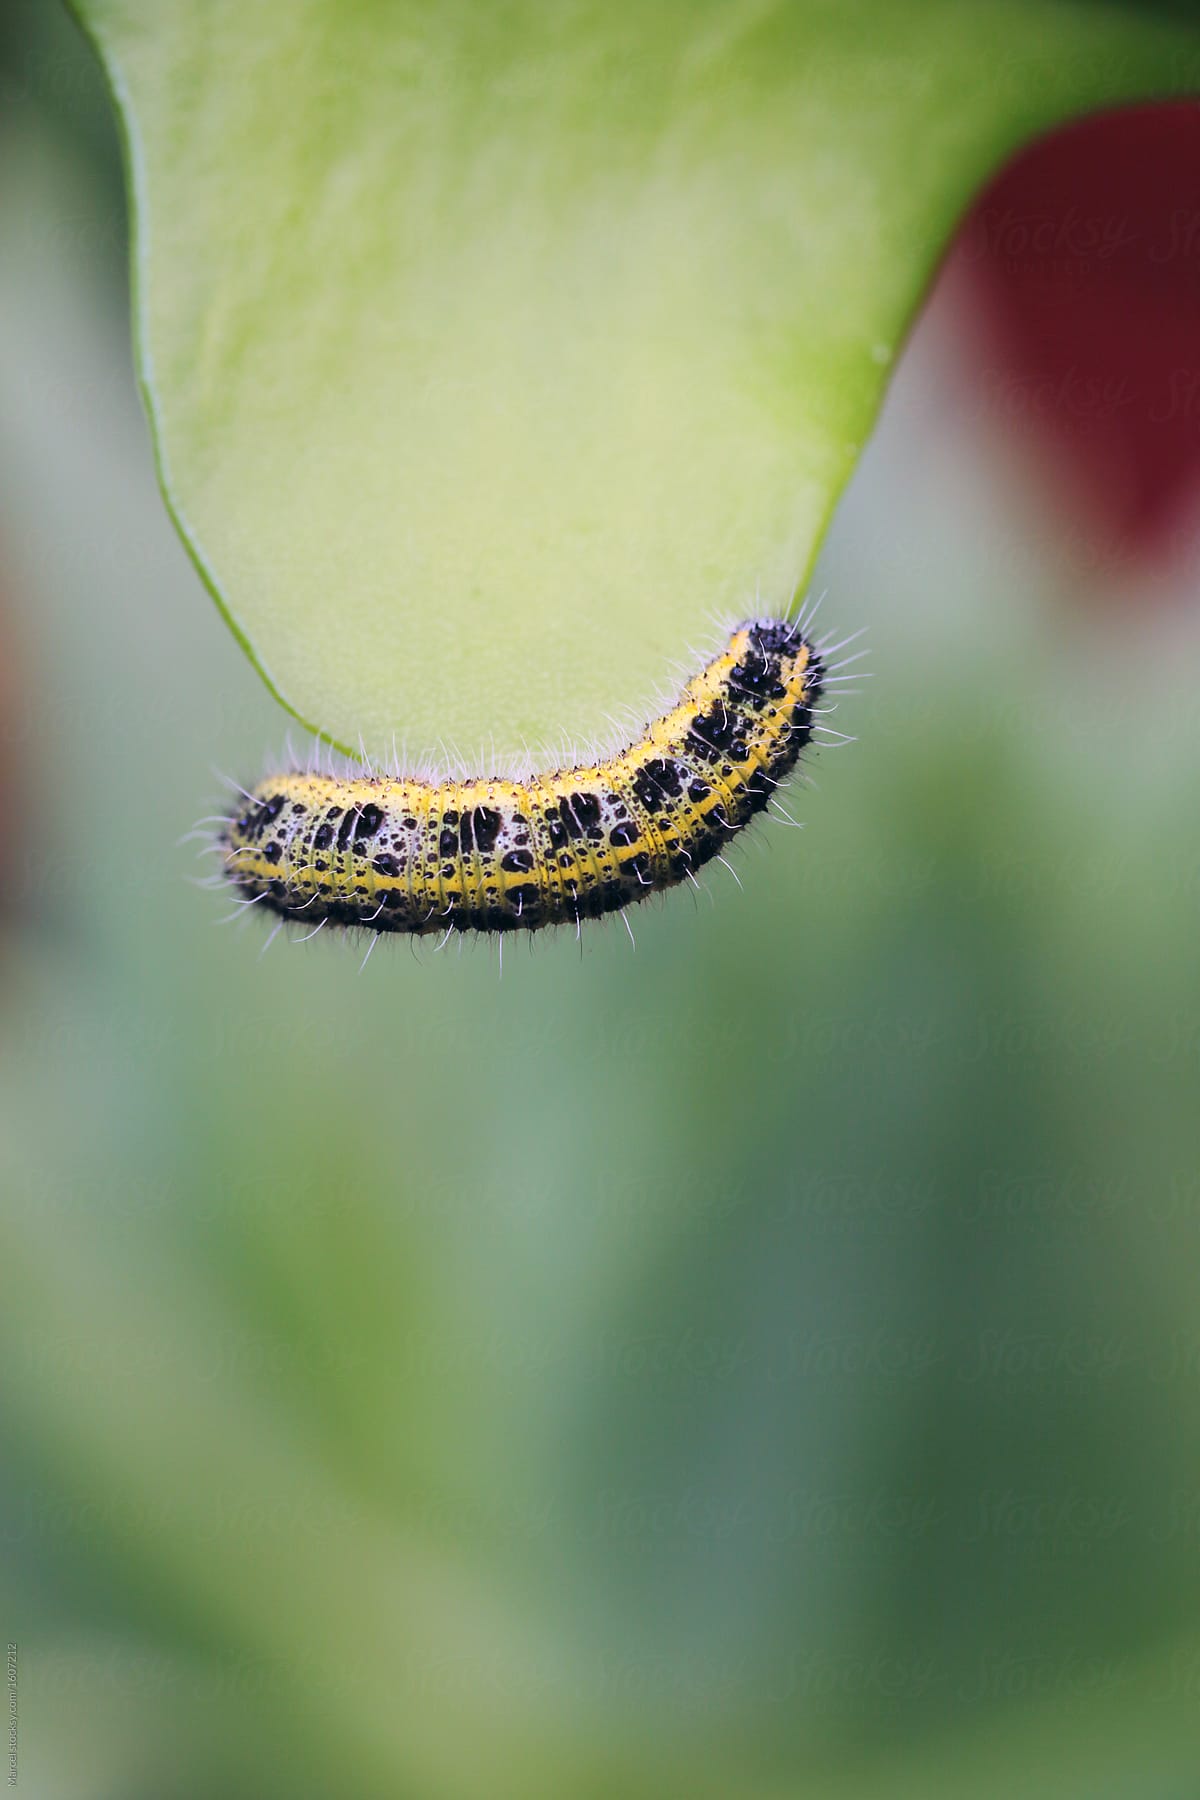 caterpillar feeding on a cactus leaf